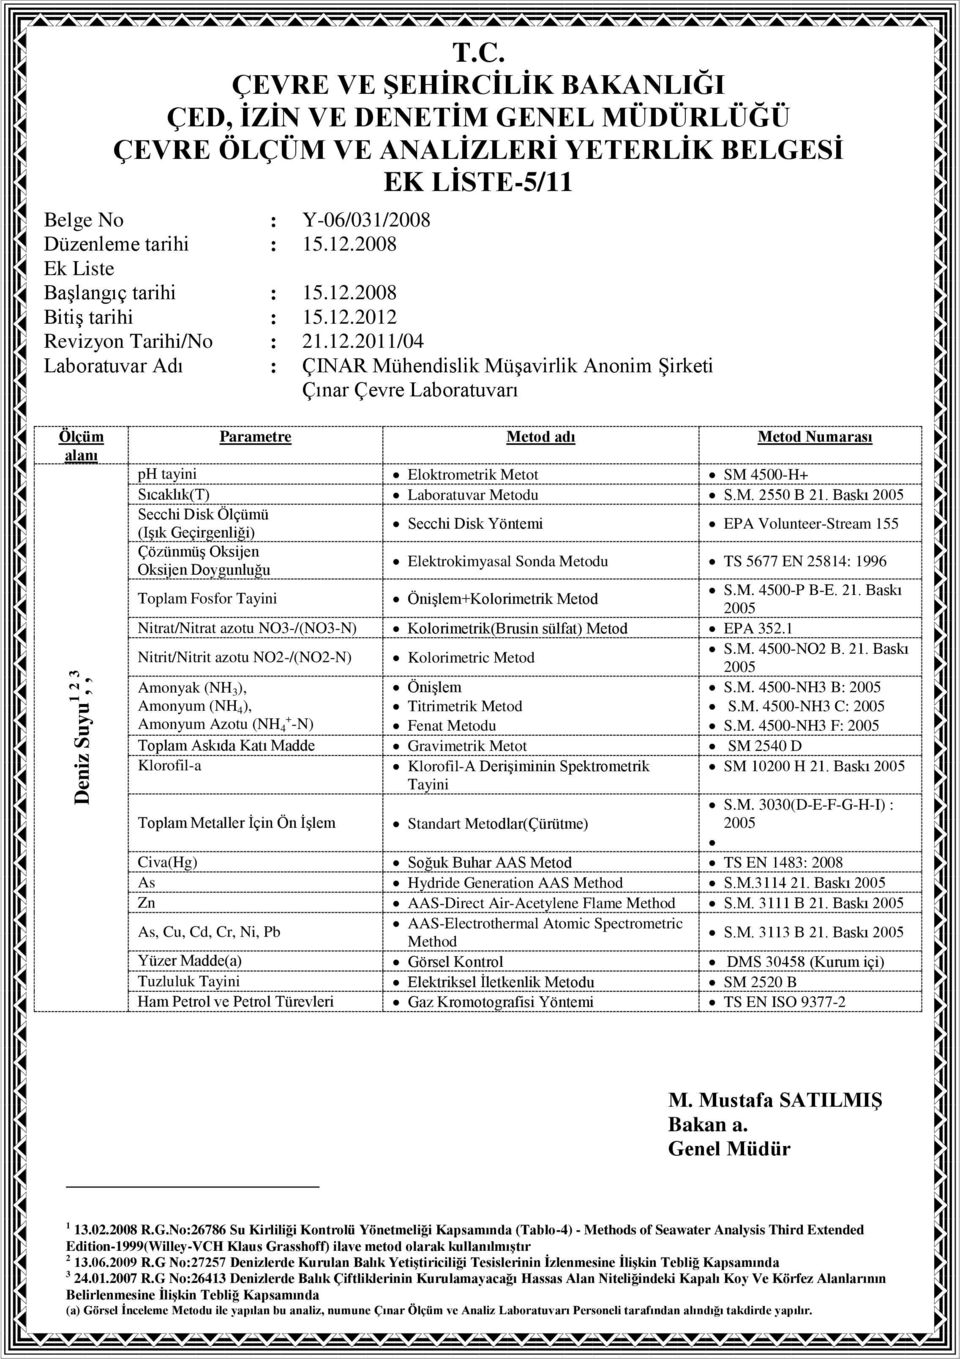 ÖniĢlem+Kolorimetrik Metod S.M. 4500-P B-E. 21. Baskı Nitrat/Nitrat azotu NO-/(NO-N) Kolorimetrik(Brusin sülfat) Metod EPA 52.1 Nitrit/Nitrit azotu NO2-/(NO2-N) Kolorimetric Metod S.M. 4500-NO2 B. 21. Baskı Amonyak (NH ), Amonyum (NH 4 ), Amonyum Azotu (NH + 4 -N) ÖniĢlem Titrimetrik Metod Fenat Metodu S.